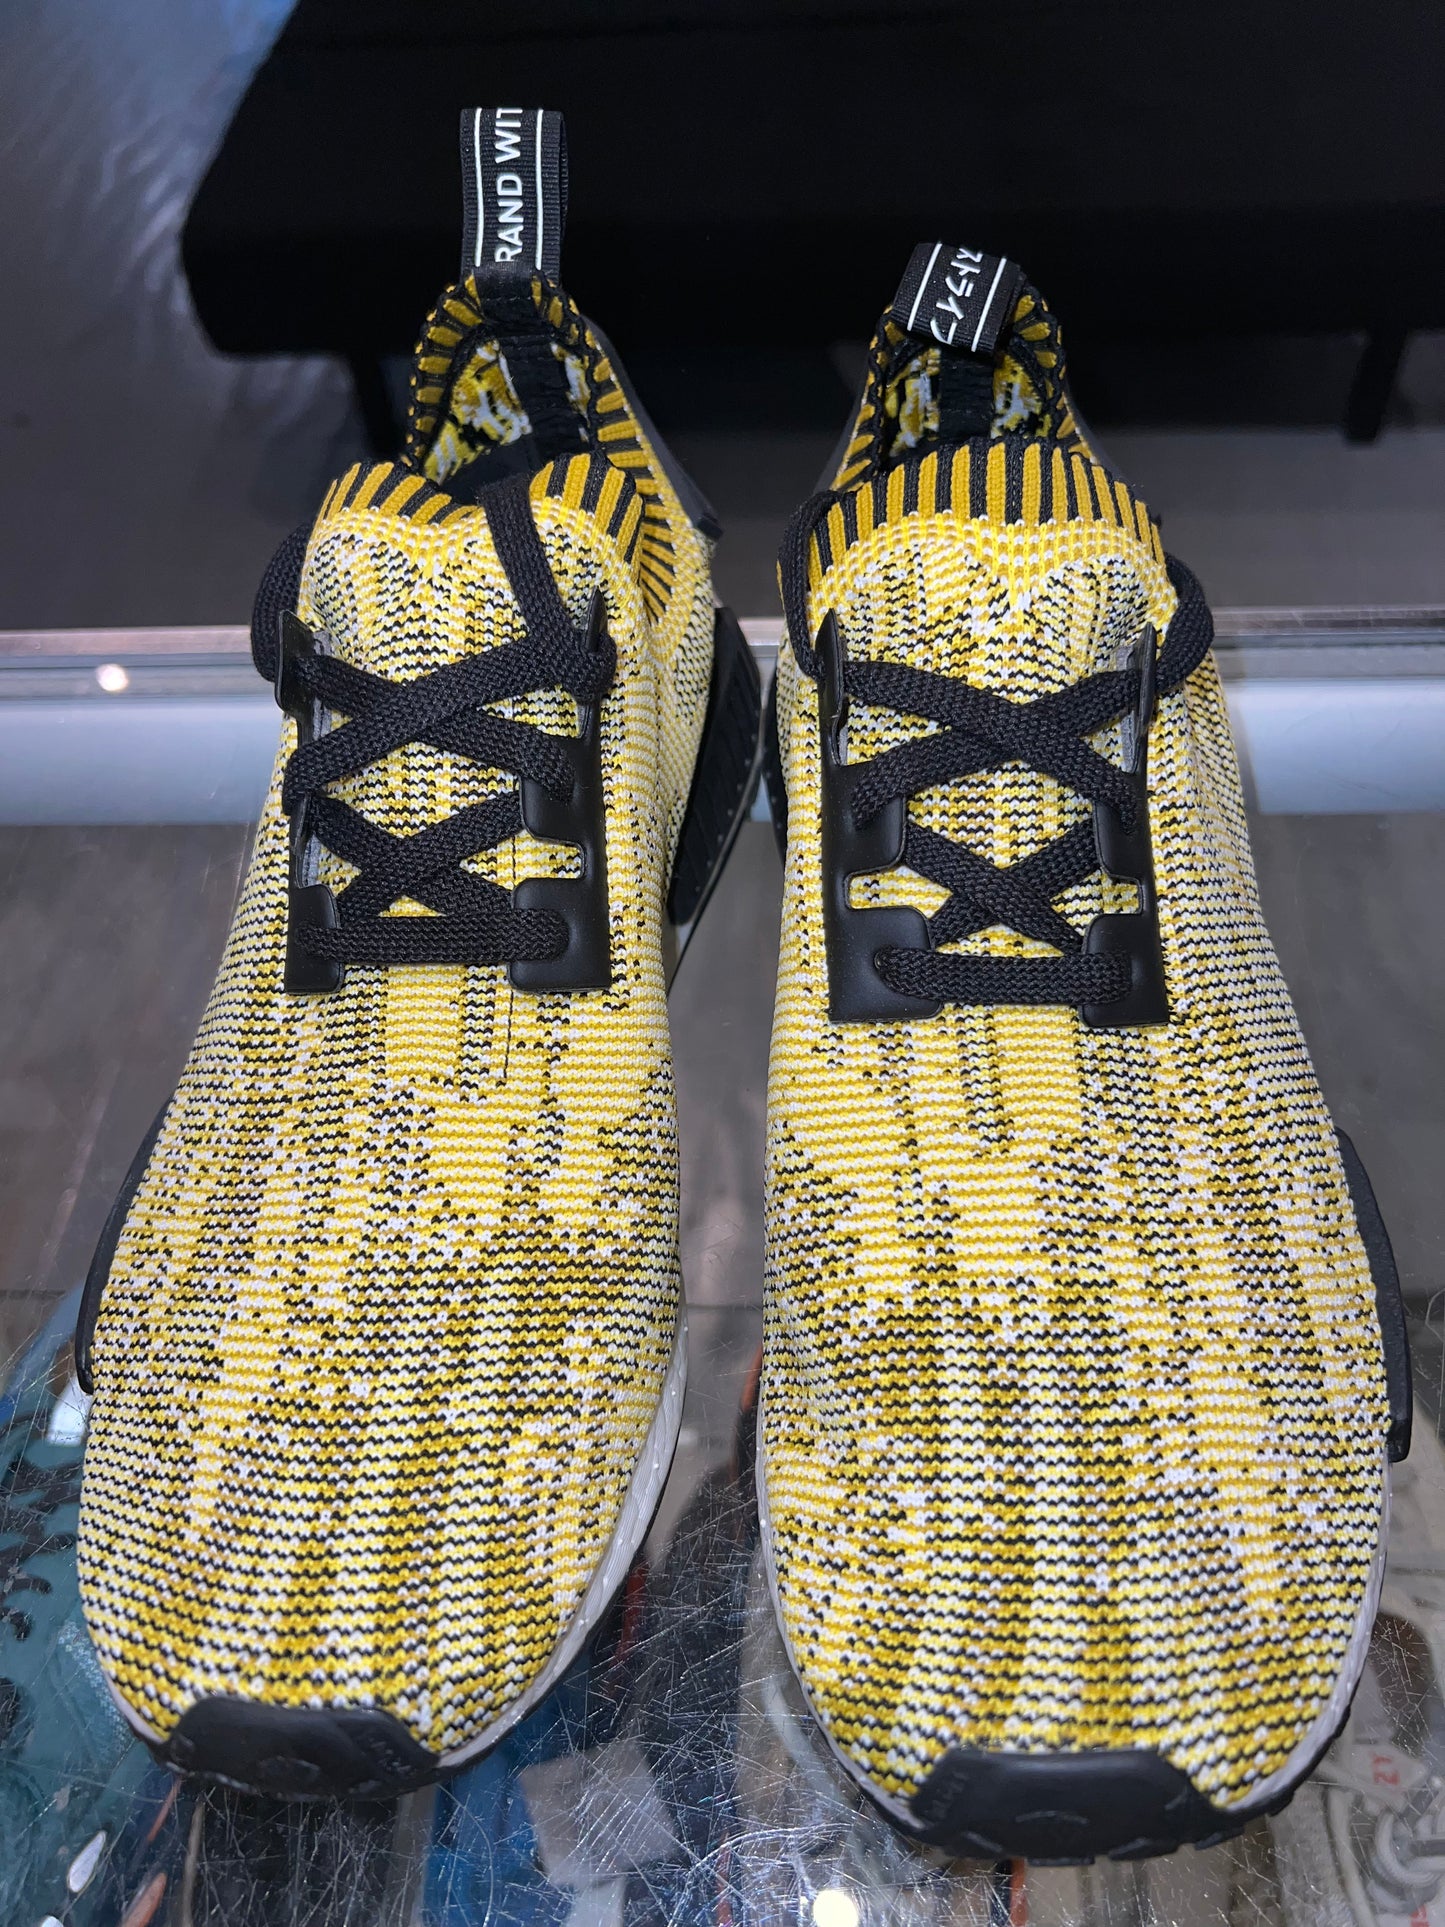 Size 11 Adidas NMD R1 “Yellow Camo” Brand New (Mall)